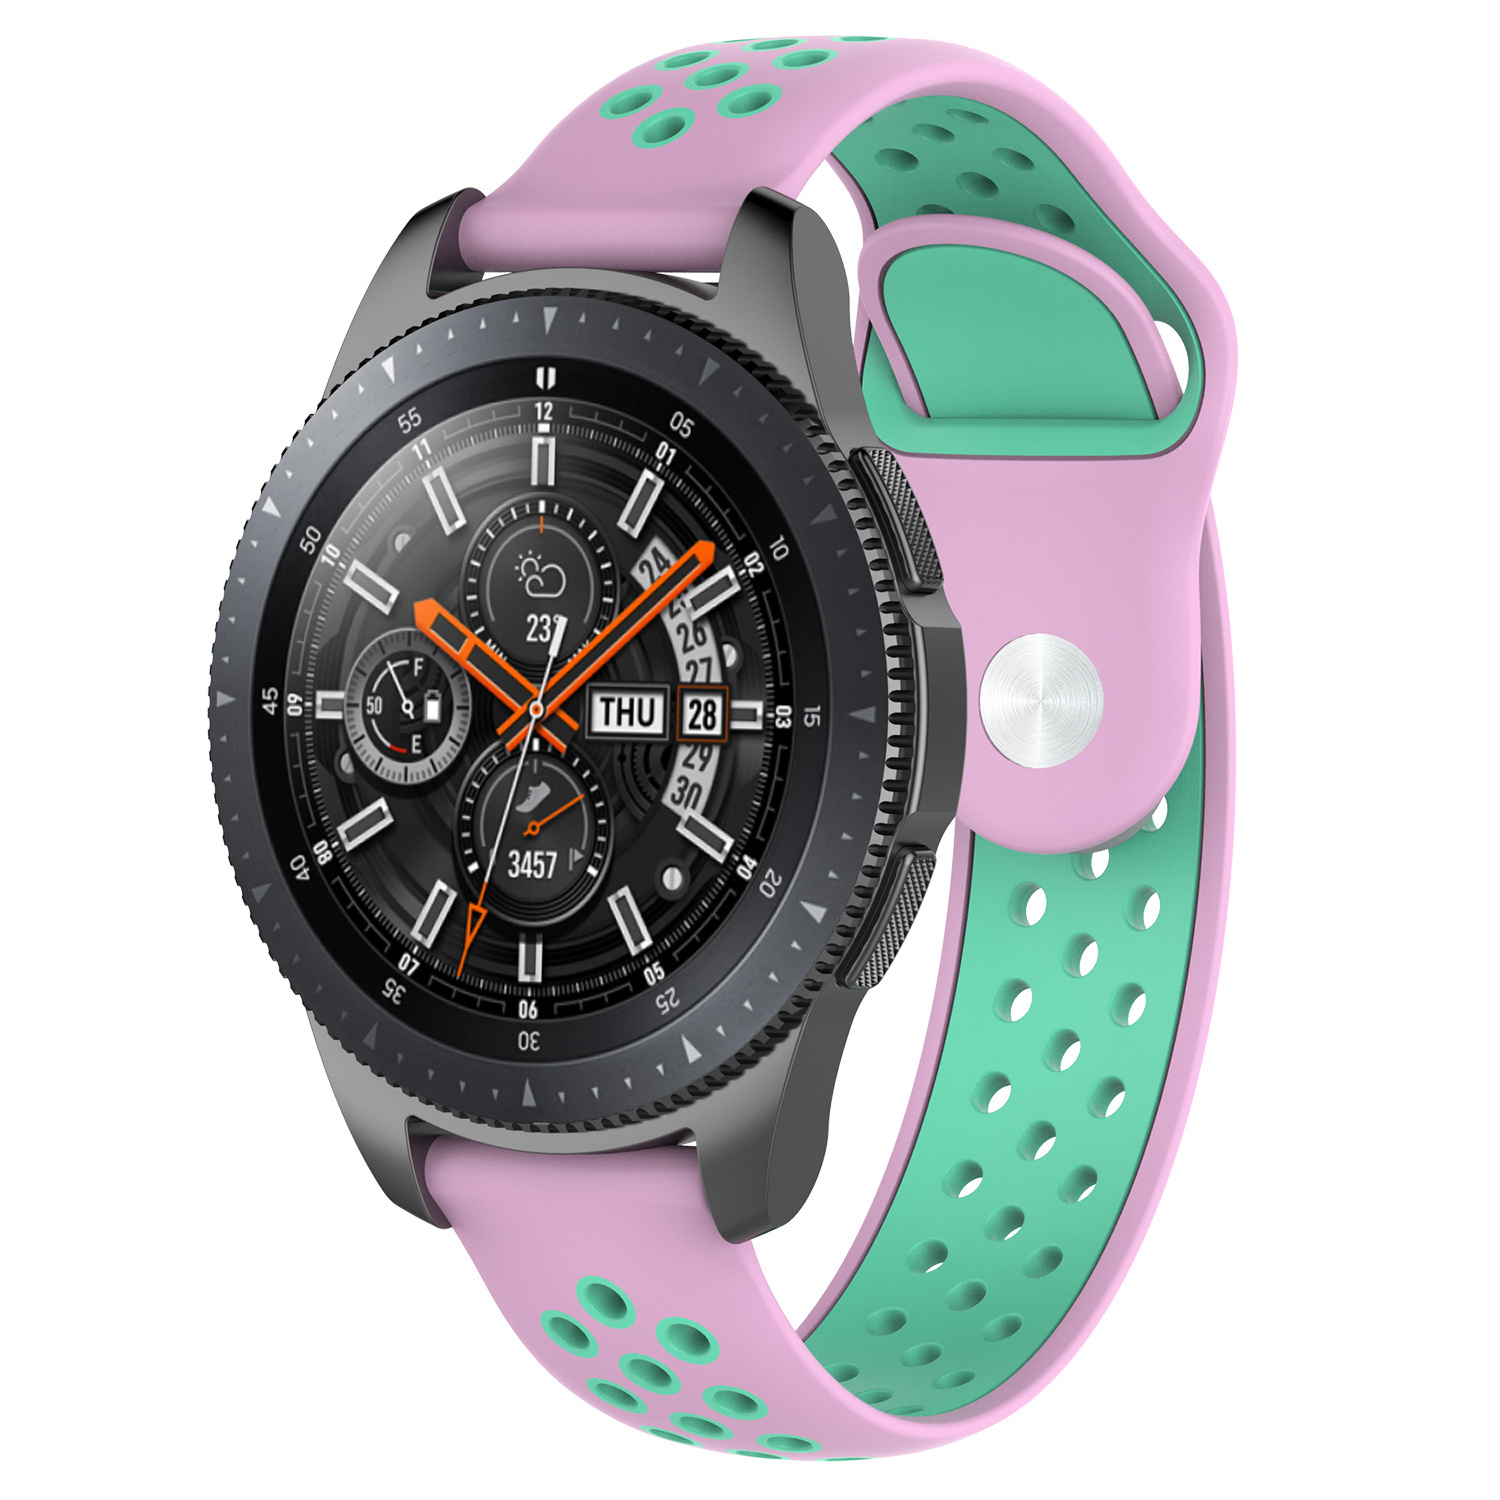 Cinturino doppio sport per Samsung Galaxy Watch - rosa verde acqua